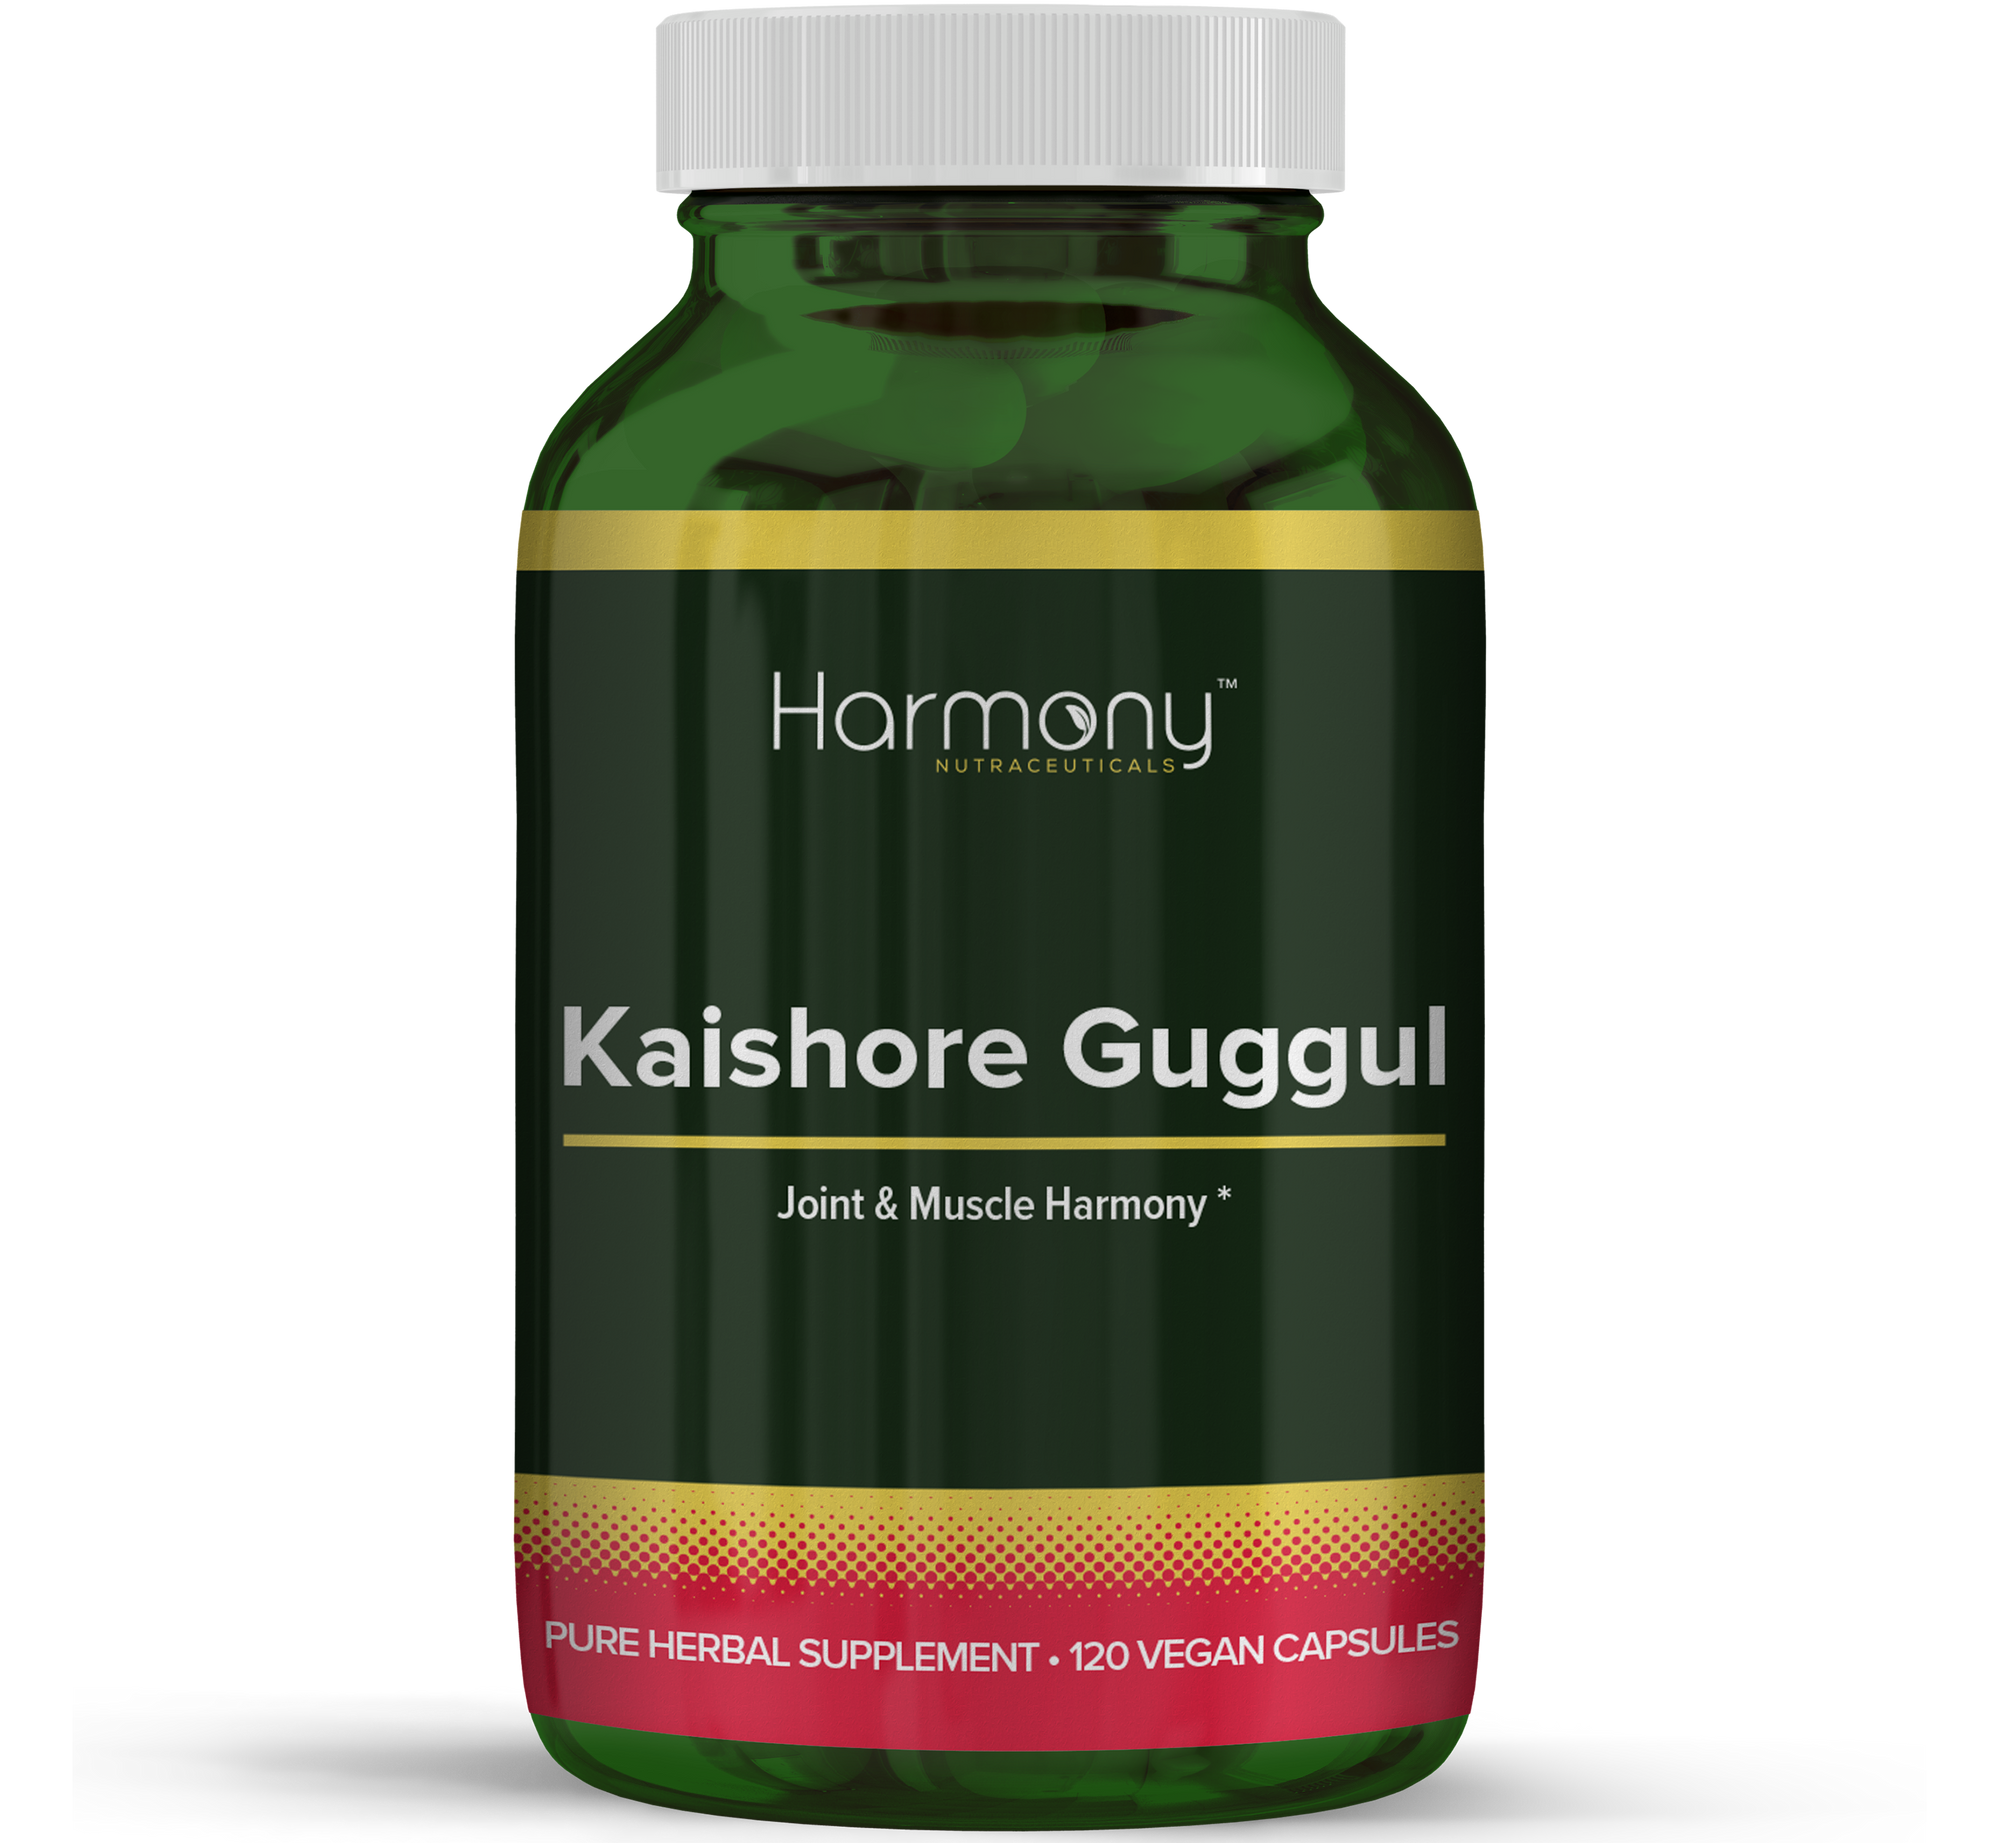 Guggul: Kaishore (Joint & Muscle Harmony)